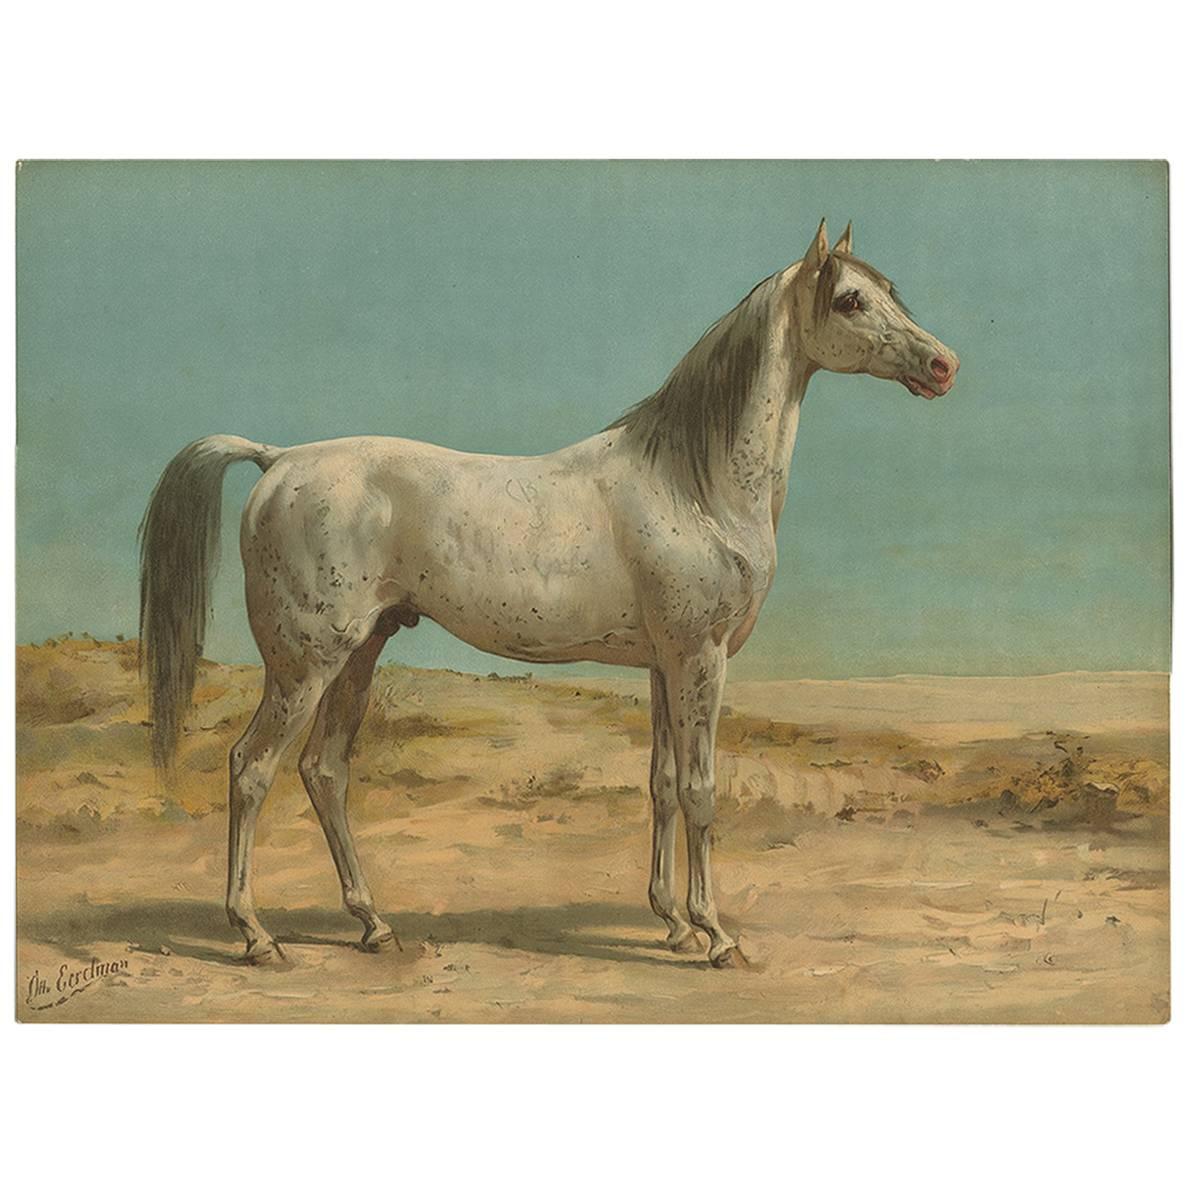 Antique Horse Print of an Arabian Horse by O. Eerelman, 1898